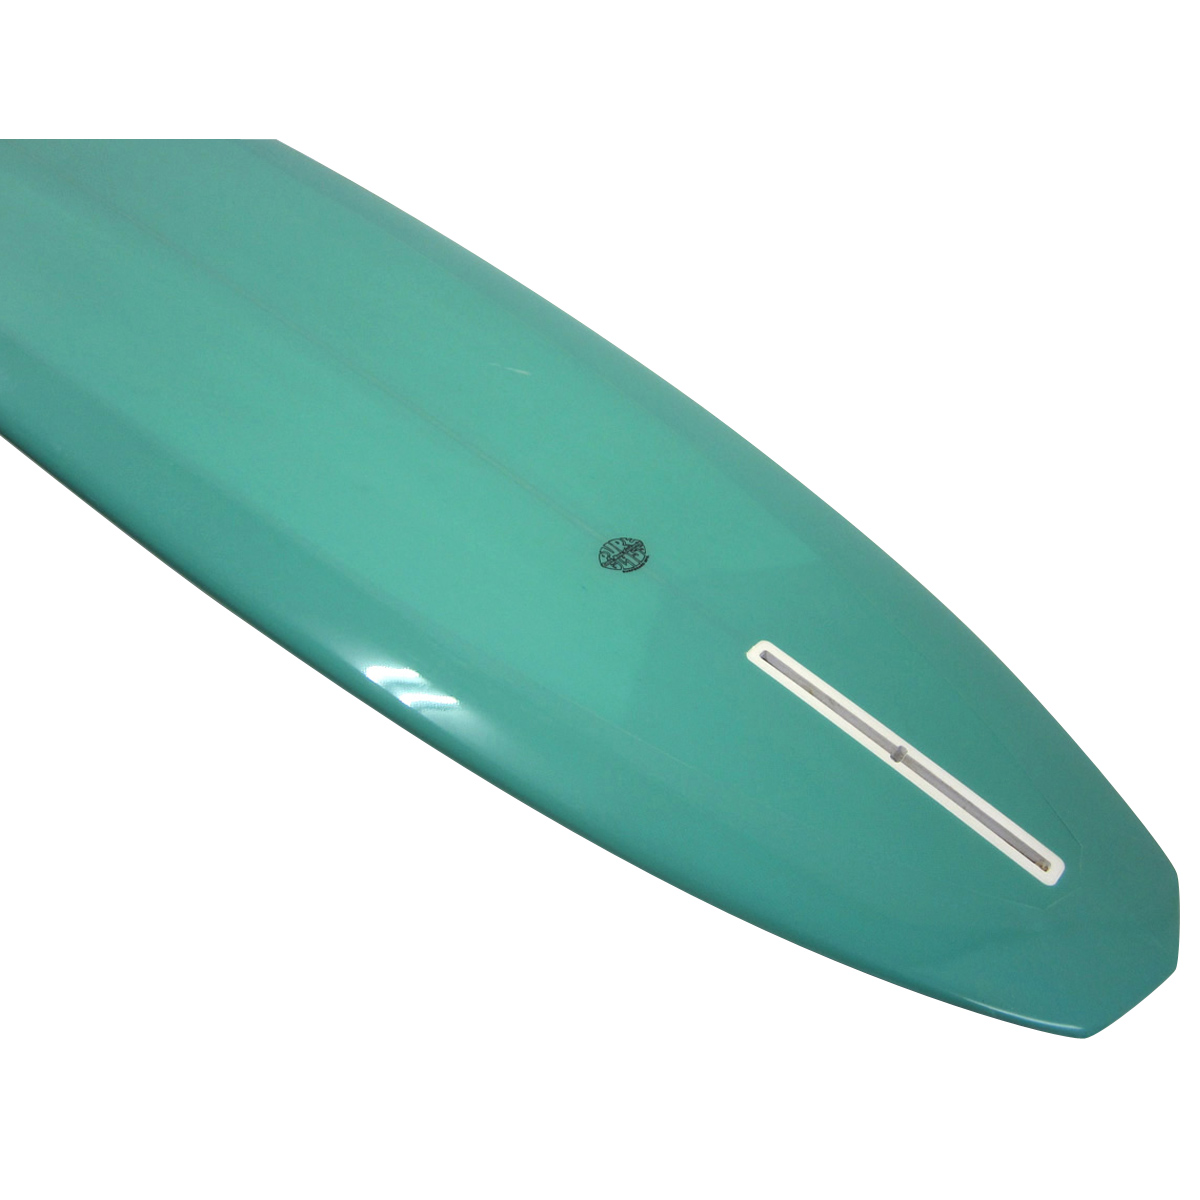 EC Surfboards / 9`4 Diamond Sled